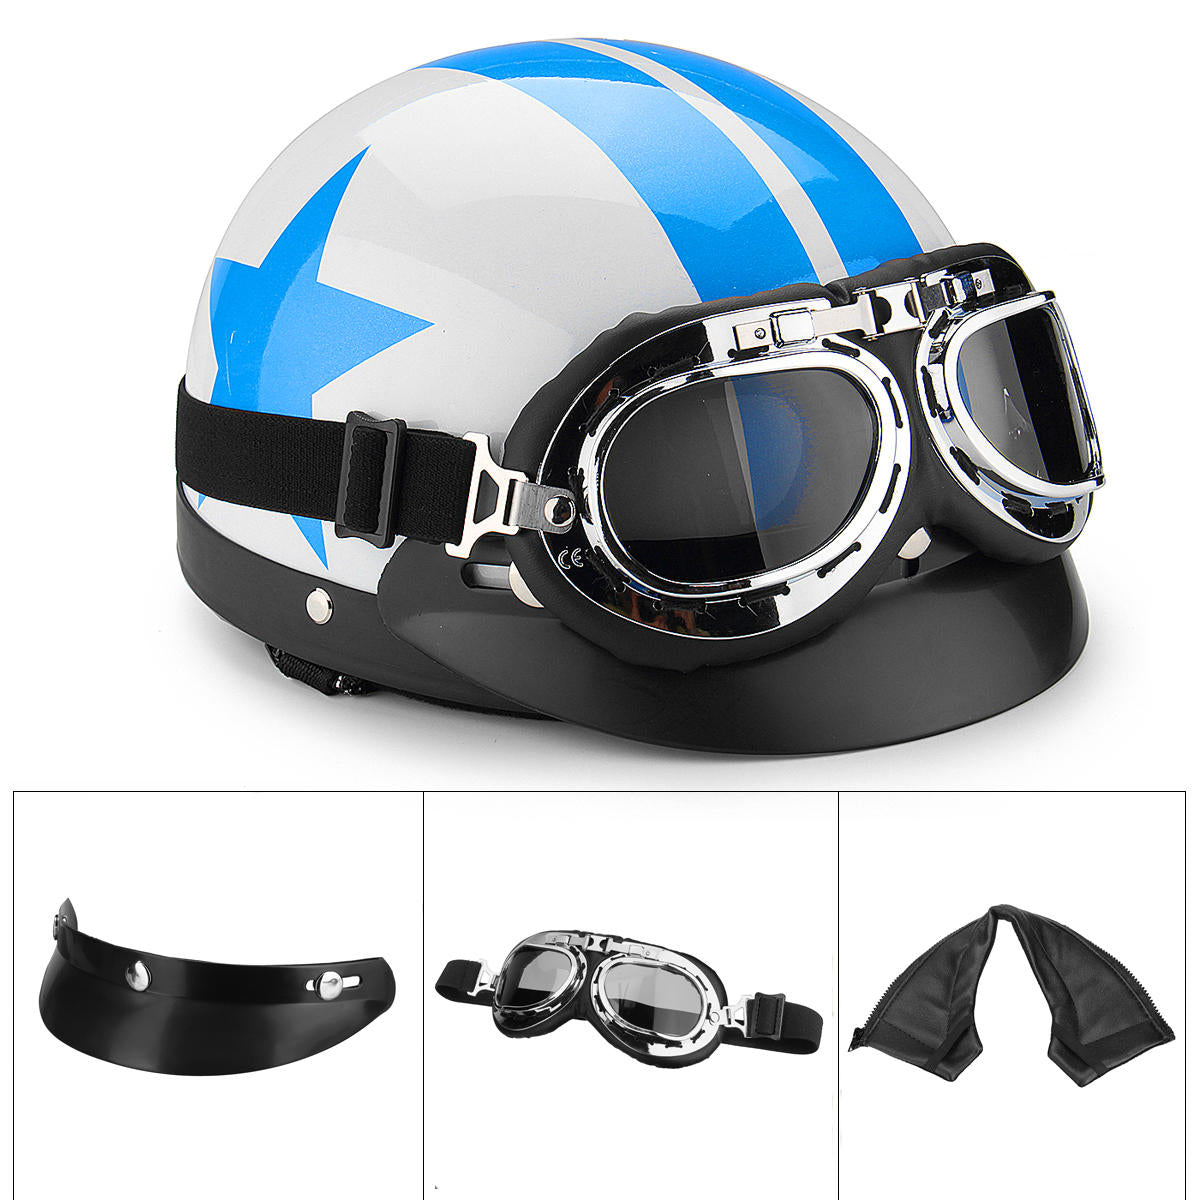 Motorcycle Protective Helmet with Sun Visors Retro